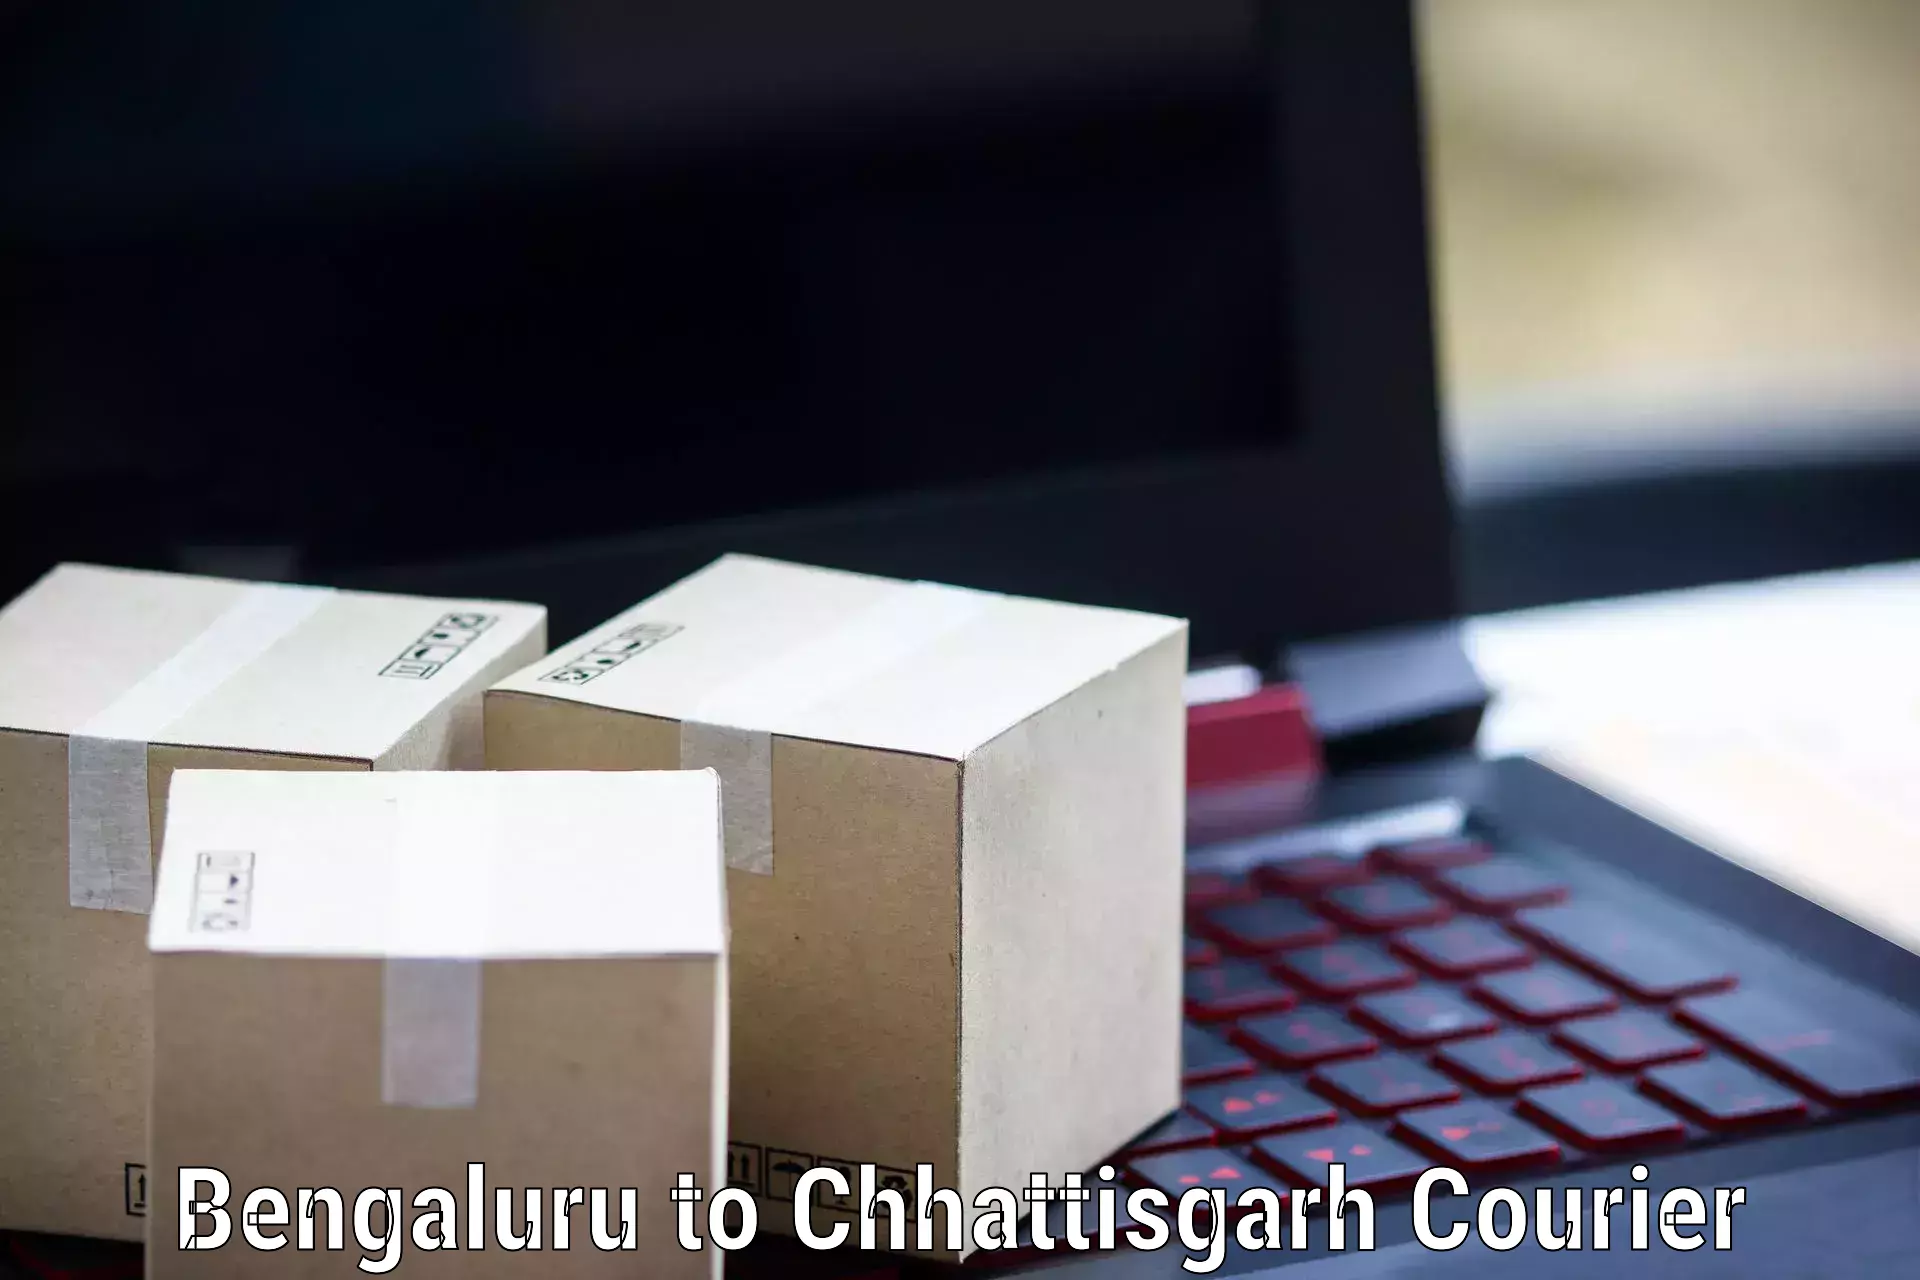 Courier service comparison in Bengaluru to Charama